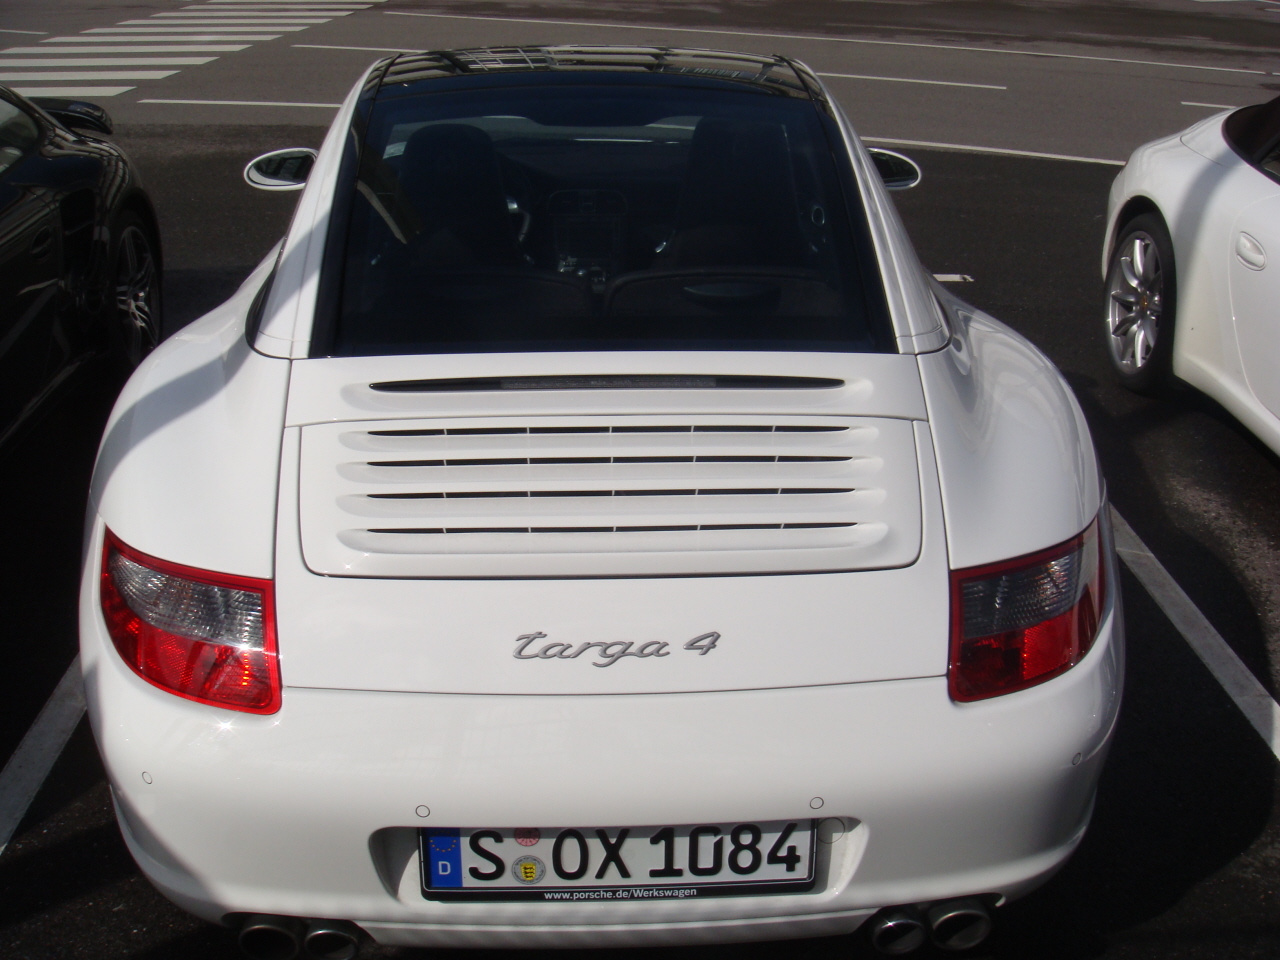 Visita Rapida a Porsche / Fast Visit to Porsche-targa4.JPG